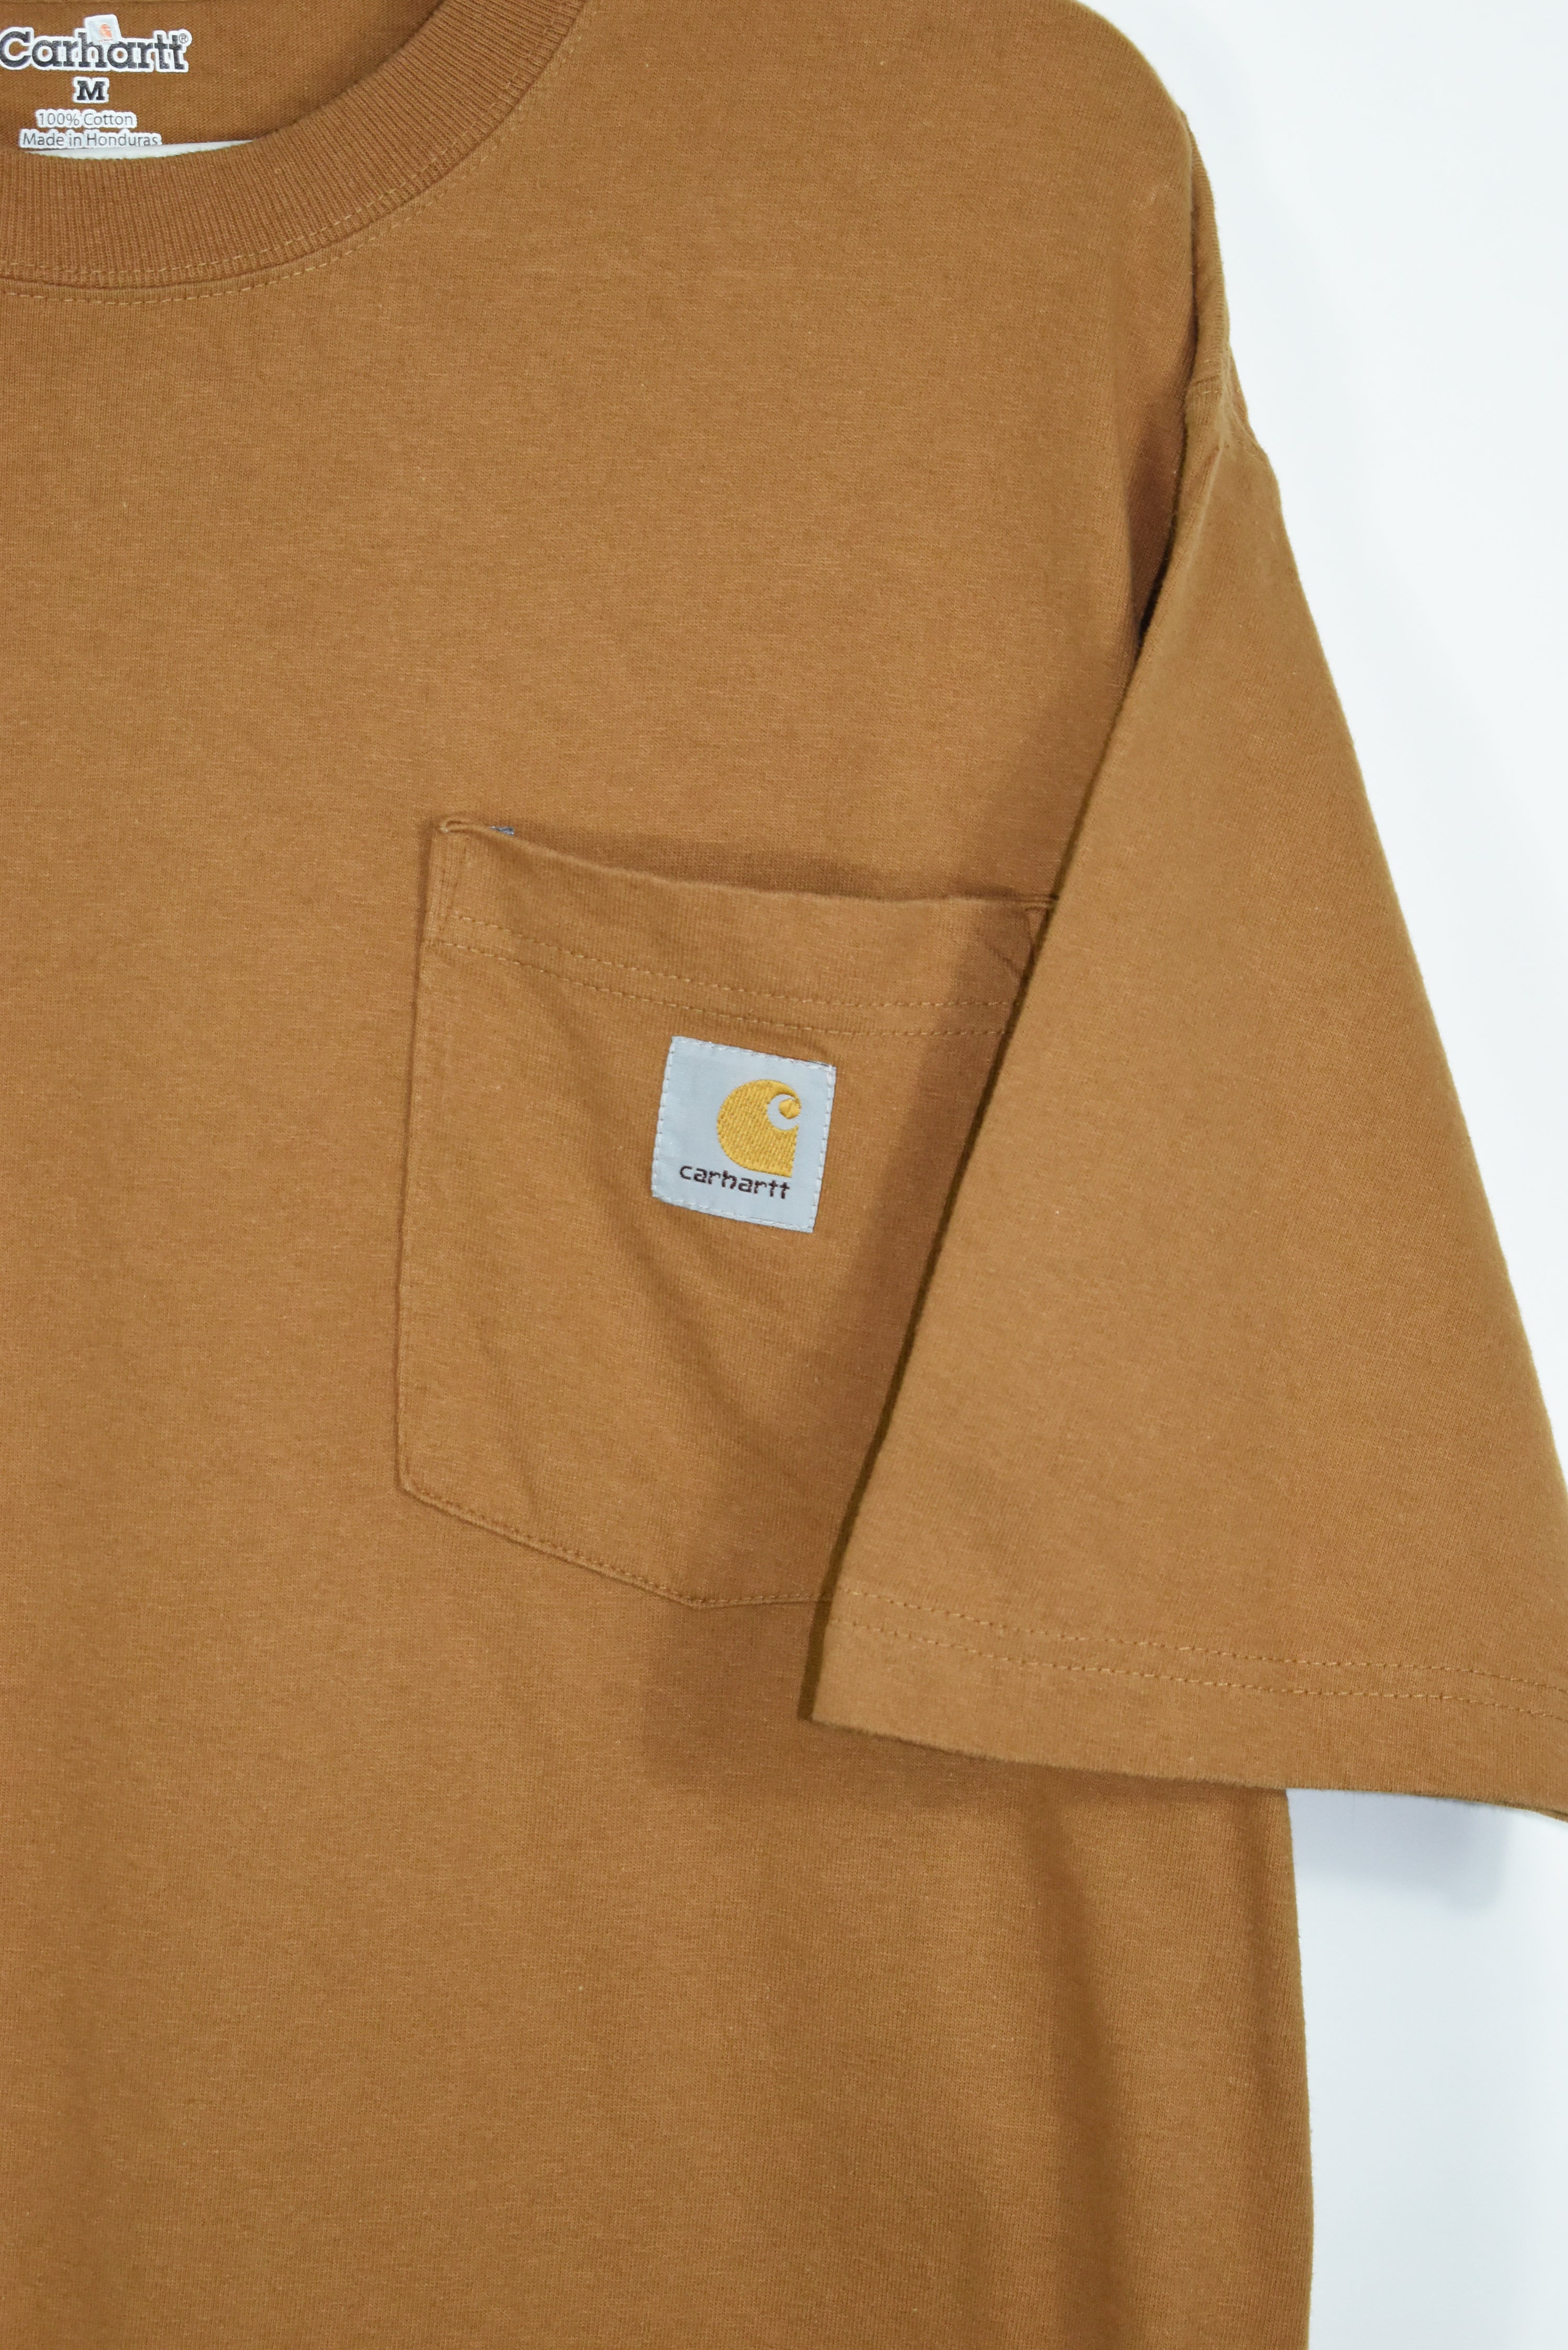 Vintage Carhartt Brown Embroidery T Shirt Medium